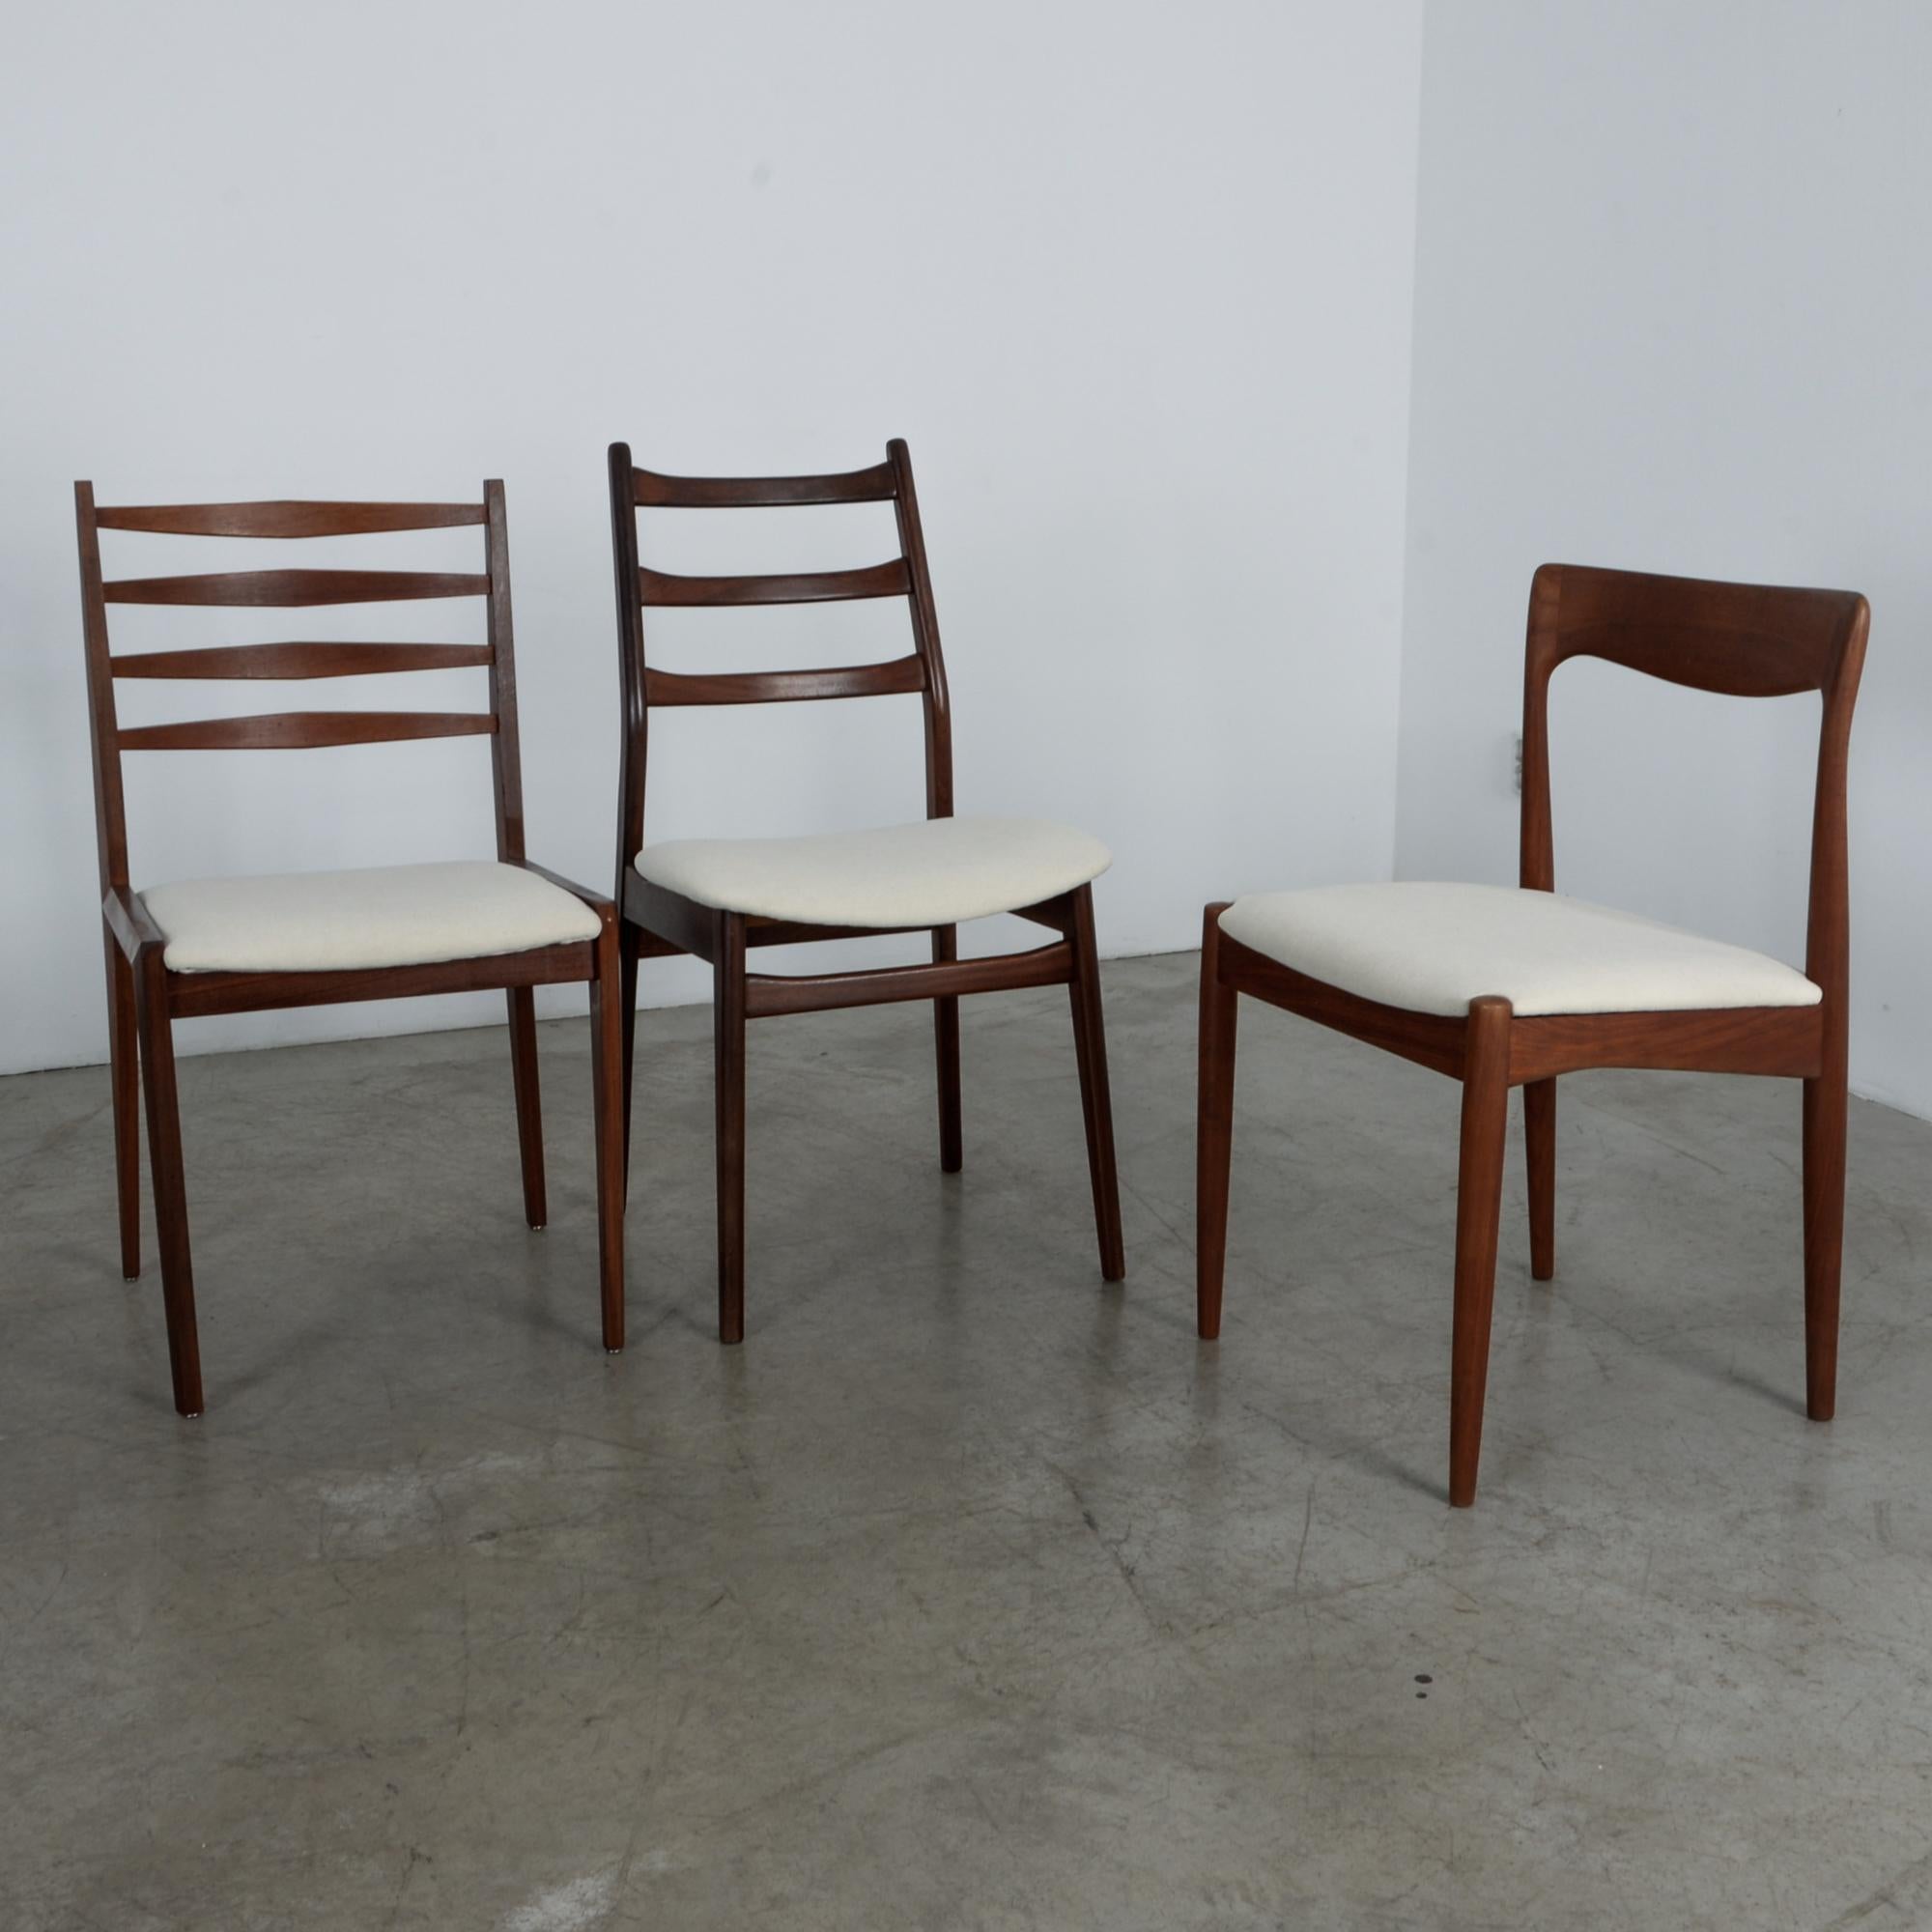 20th Century Danish Modern Mixed Dining Chairs - Set of 6